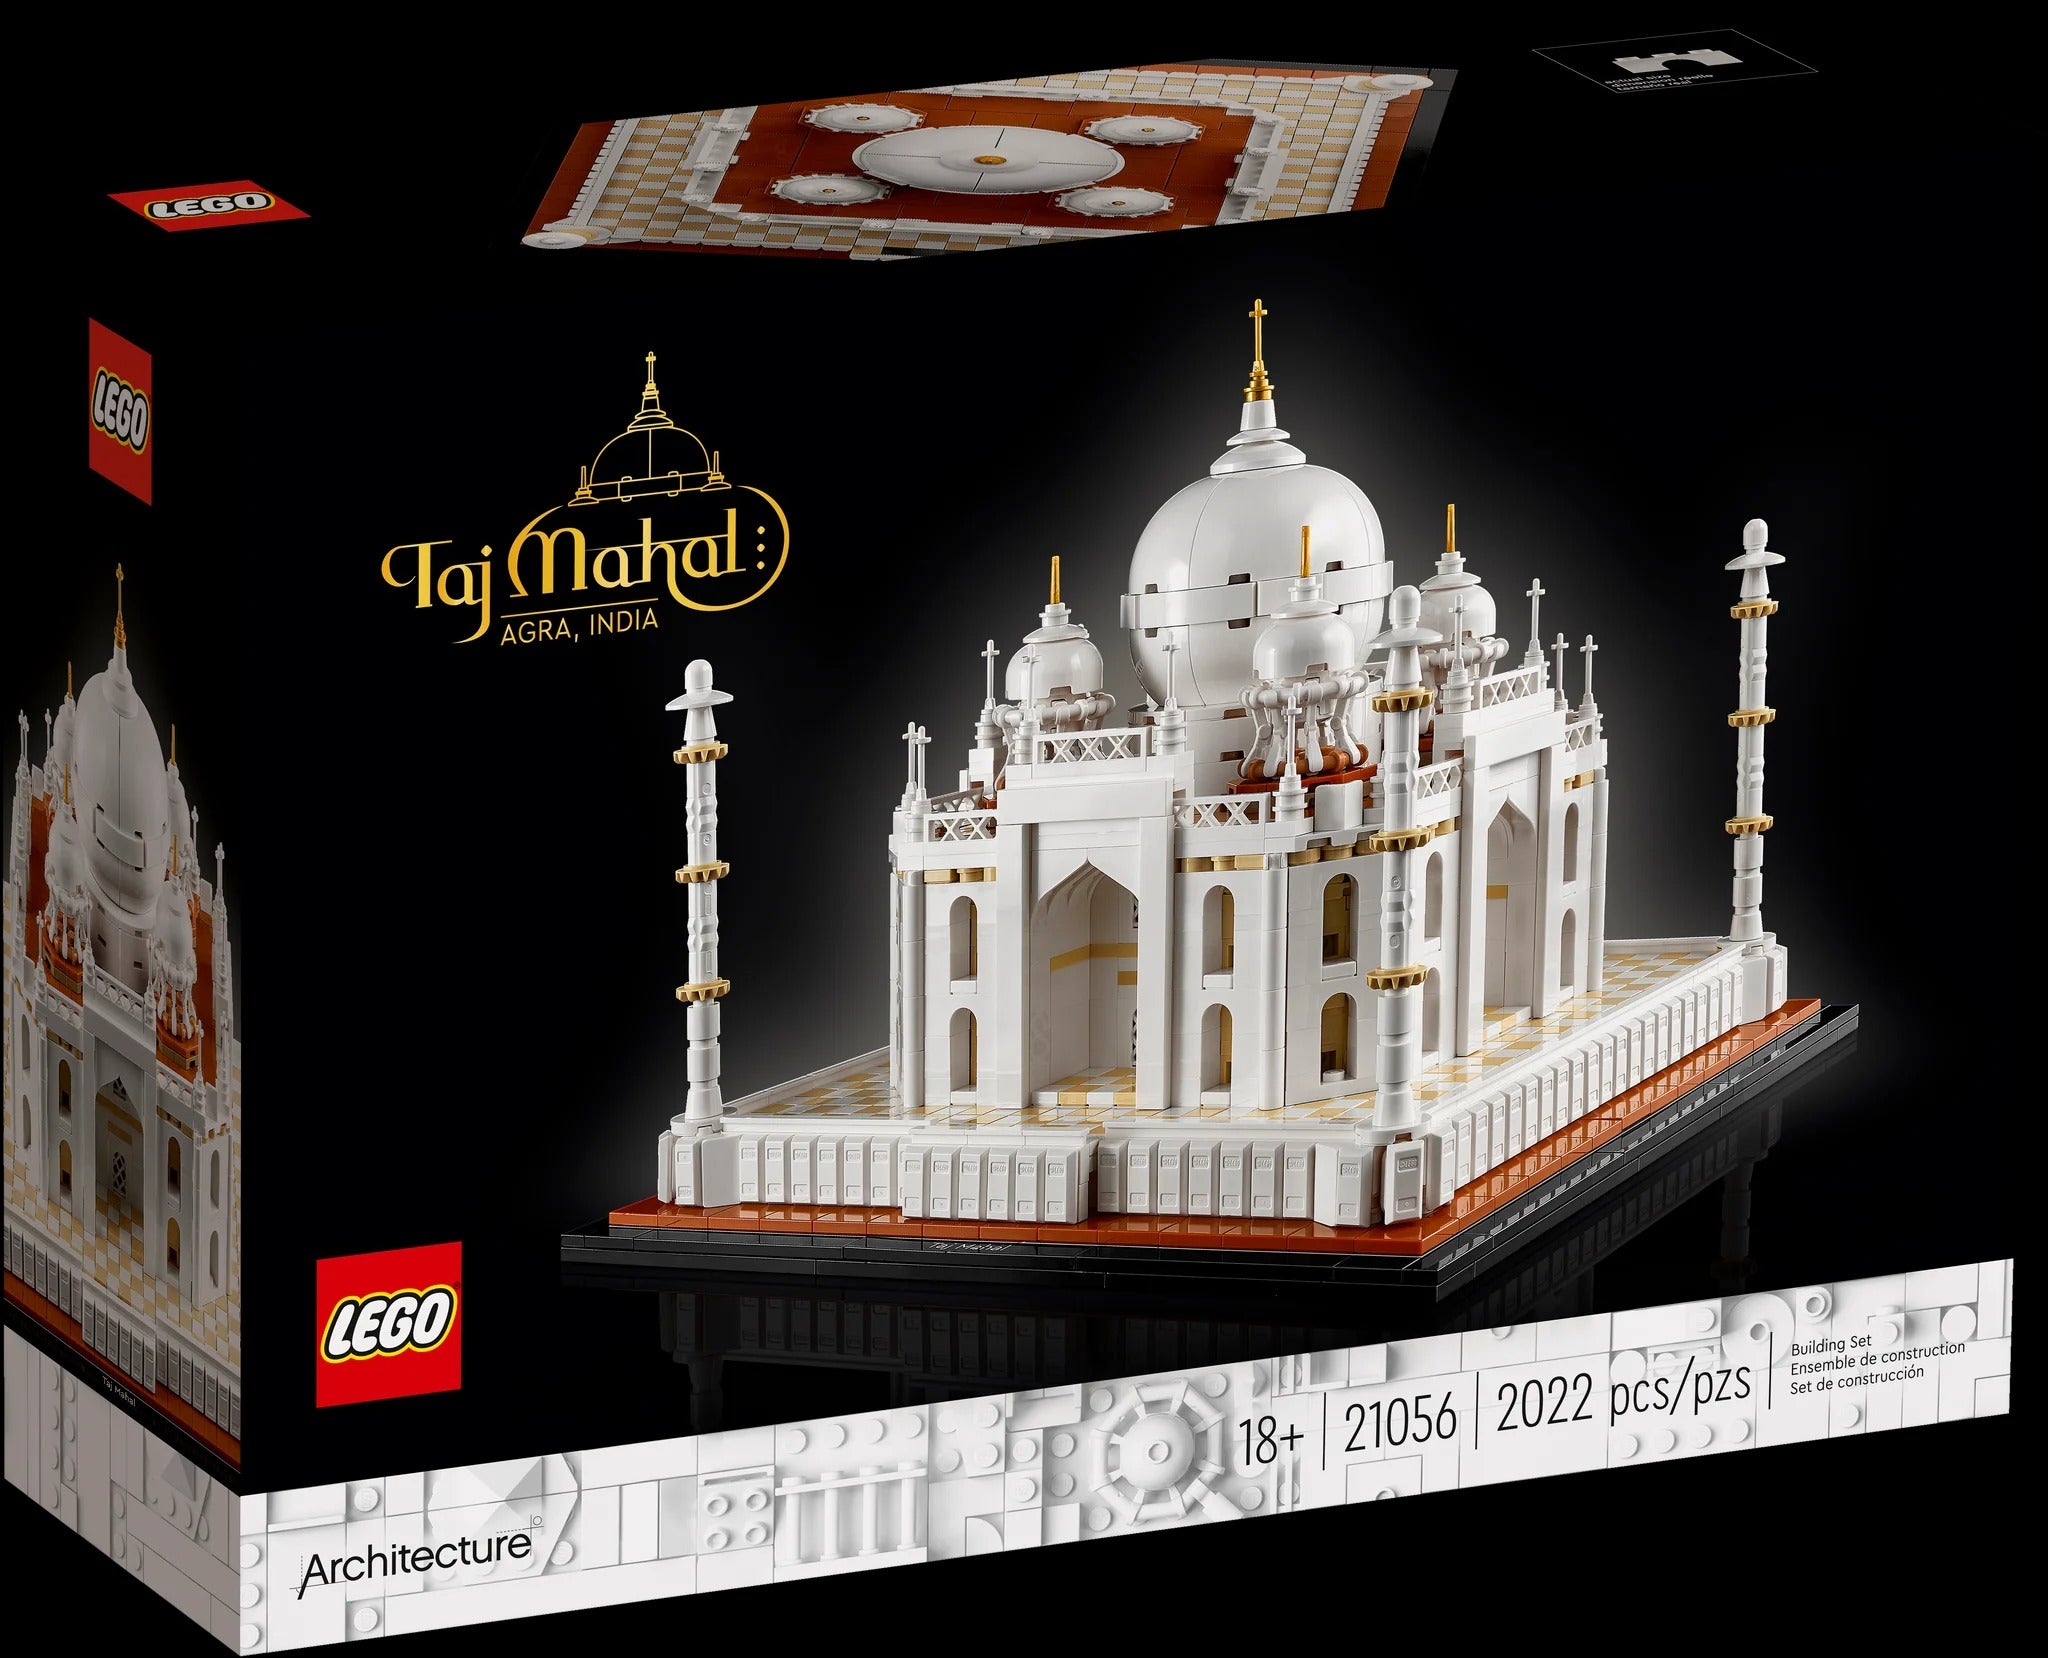 Lego: Architecture - Taj Mahal (21056)